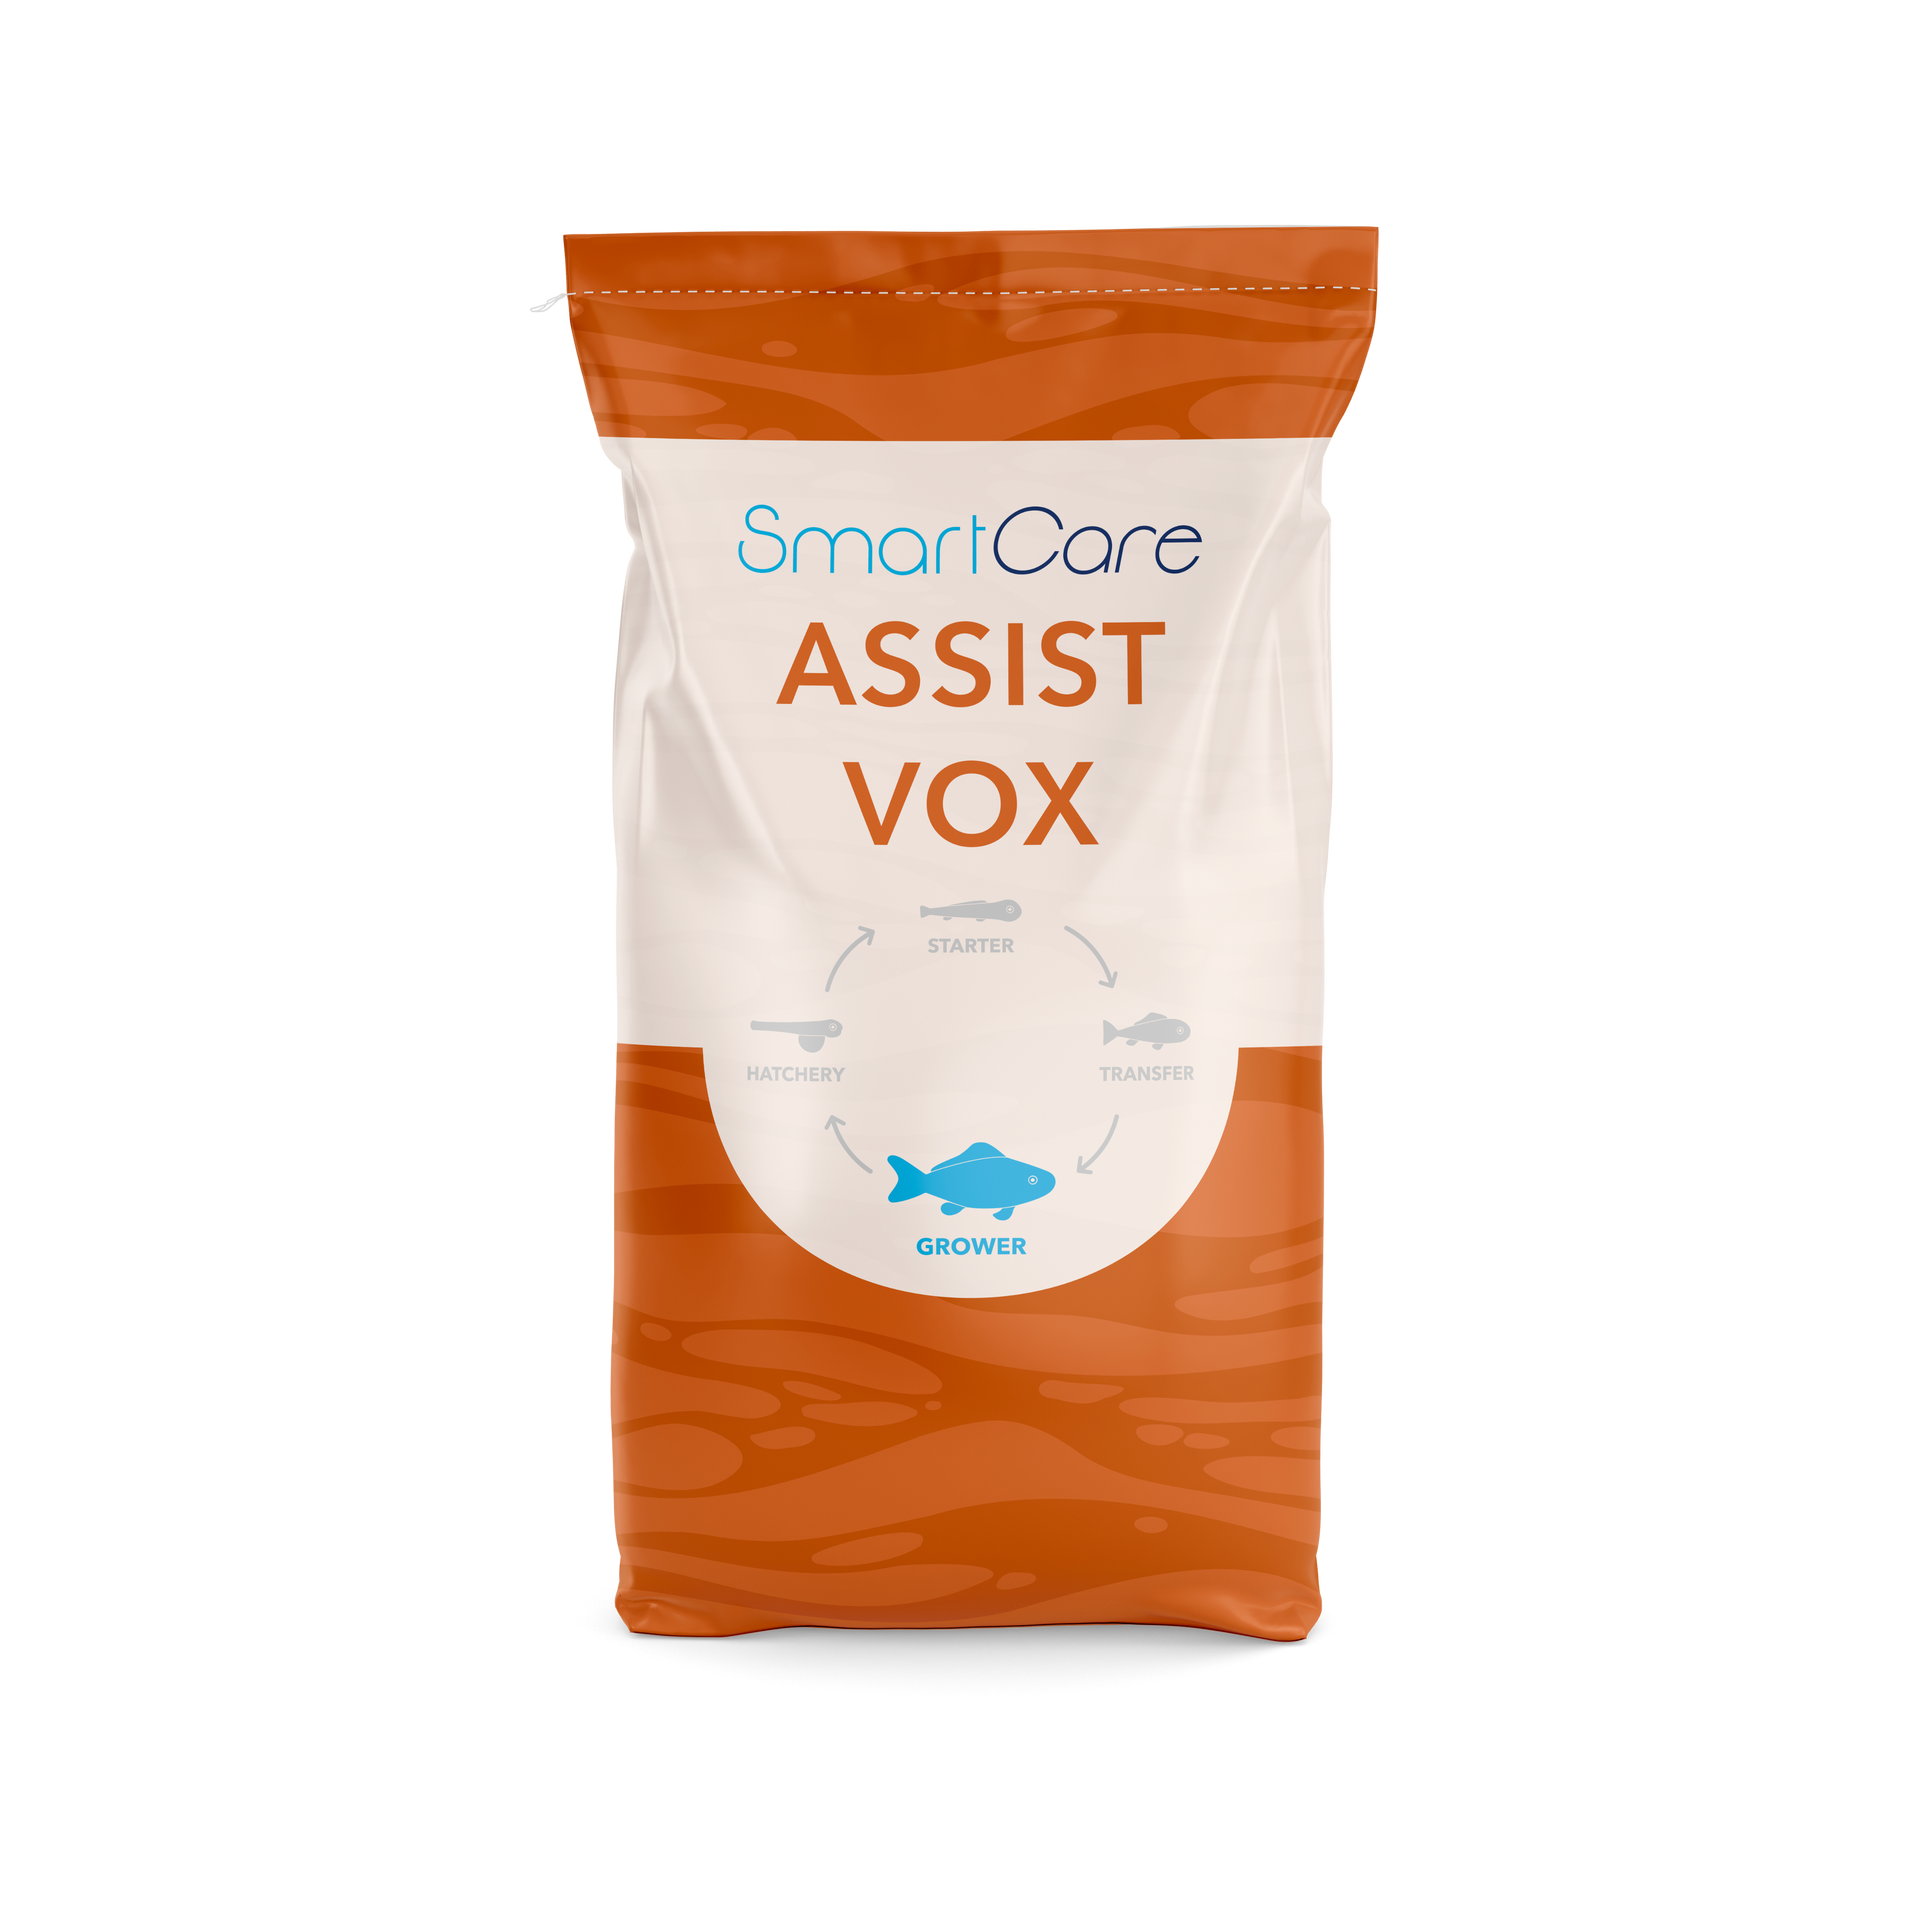 SmartCare Assist VOX health feed for aquaculture fish